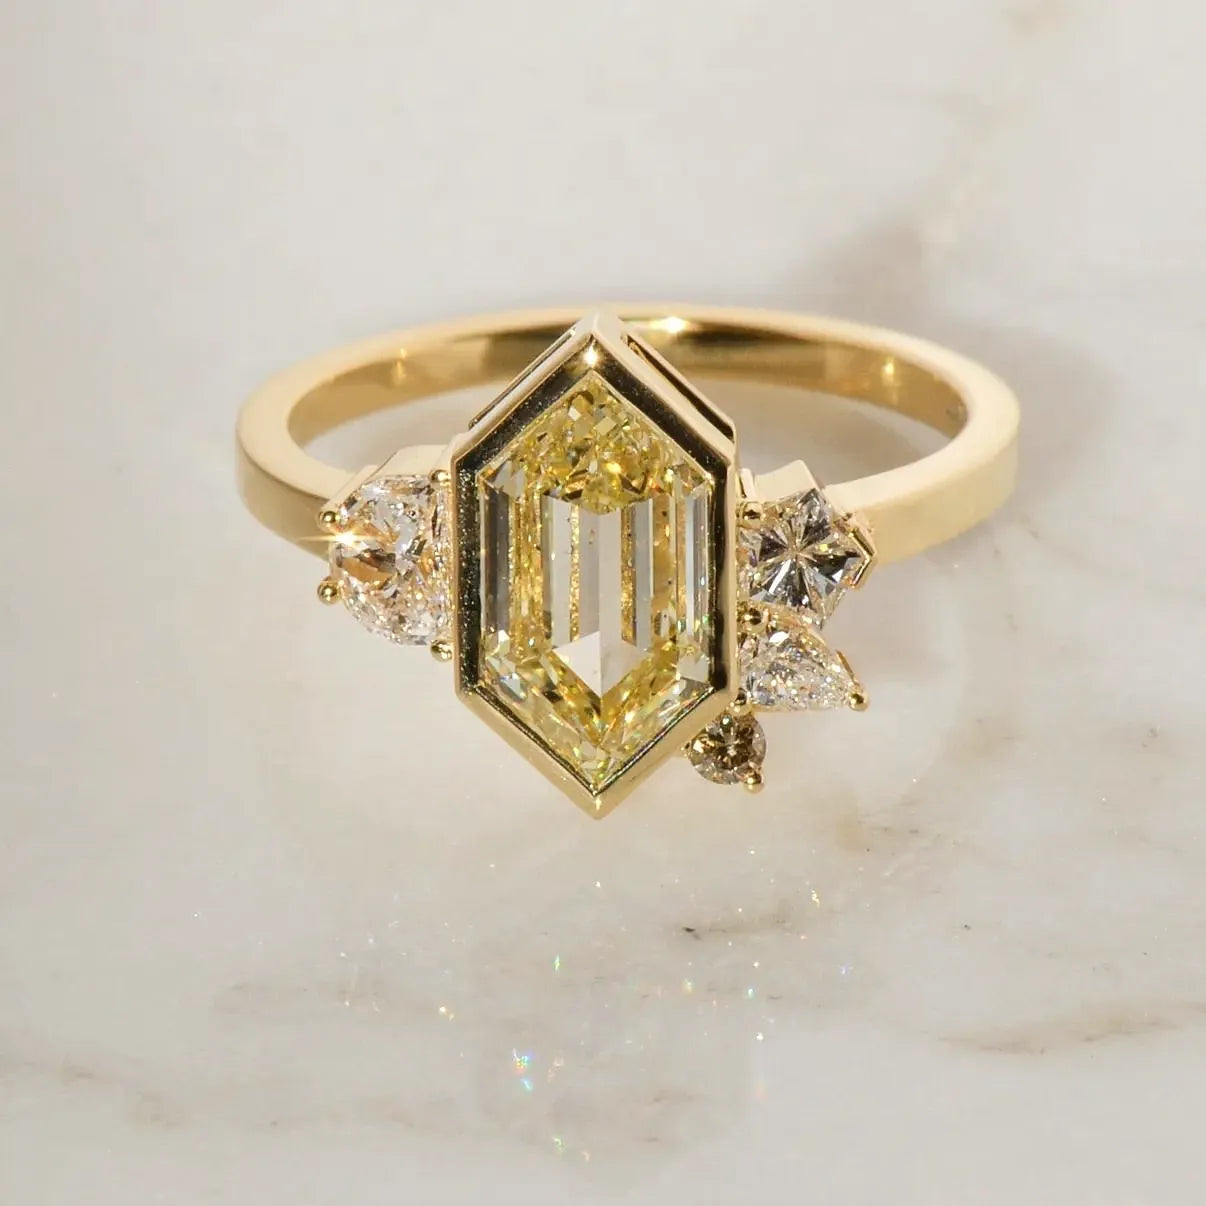 STUNNING 2.00ct elongated hexagonal cut yellow diamond engagement ring by Layla Kaisi Collection